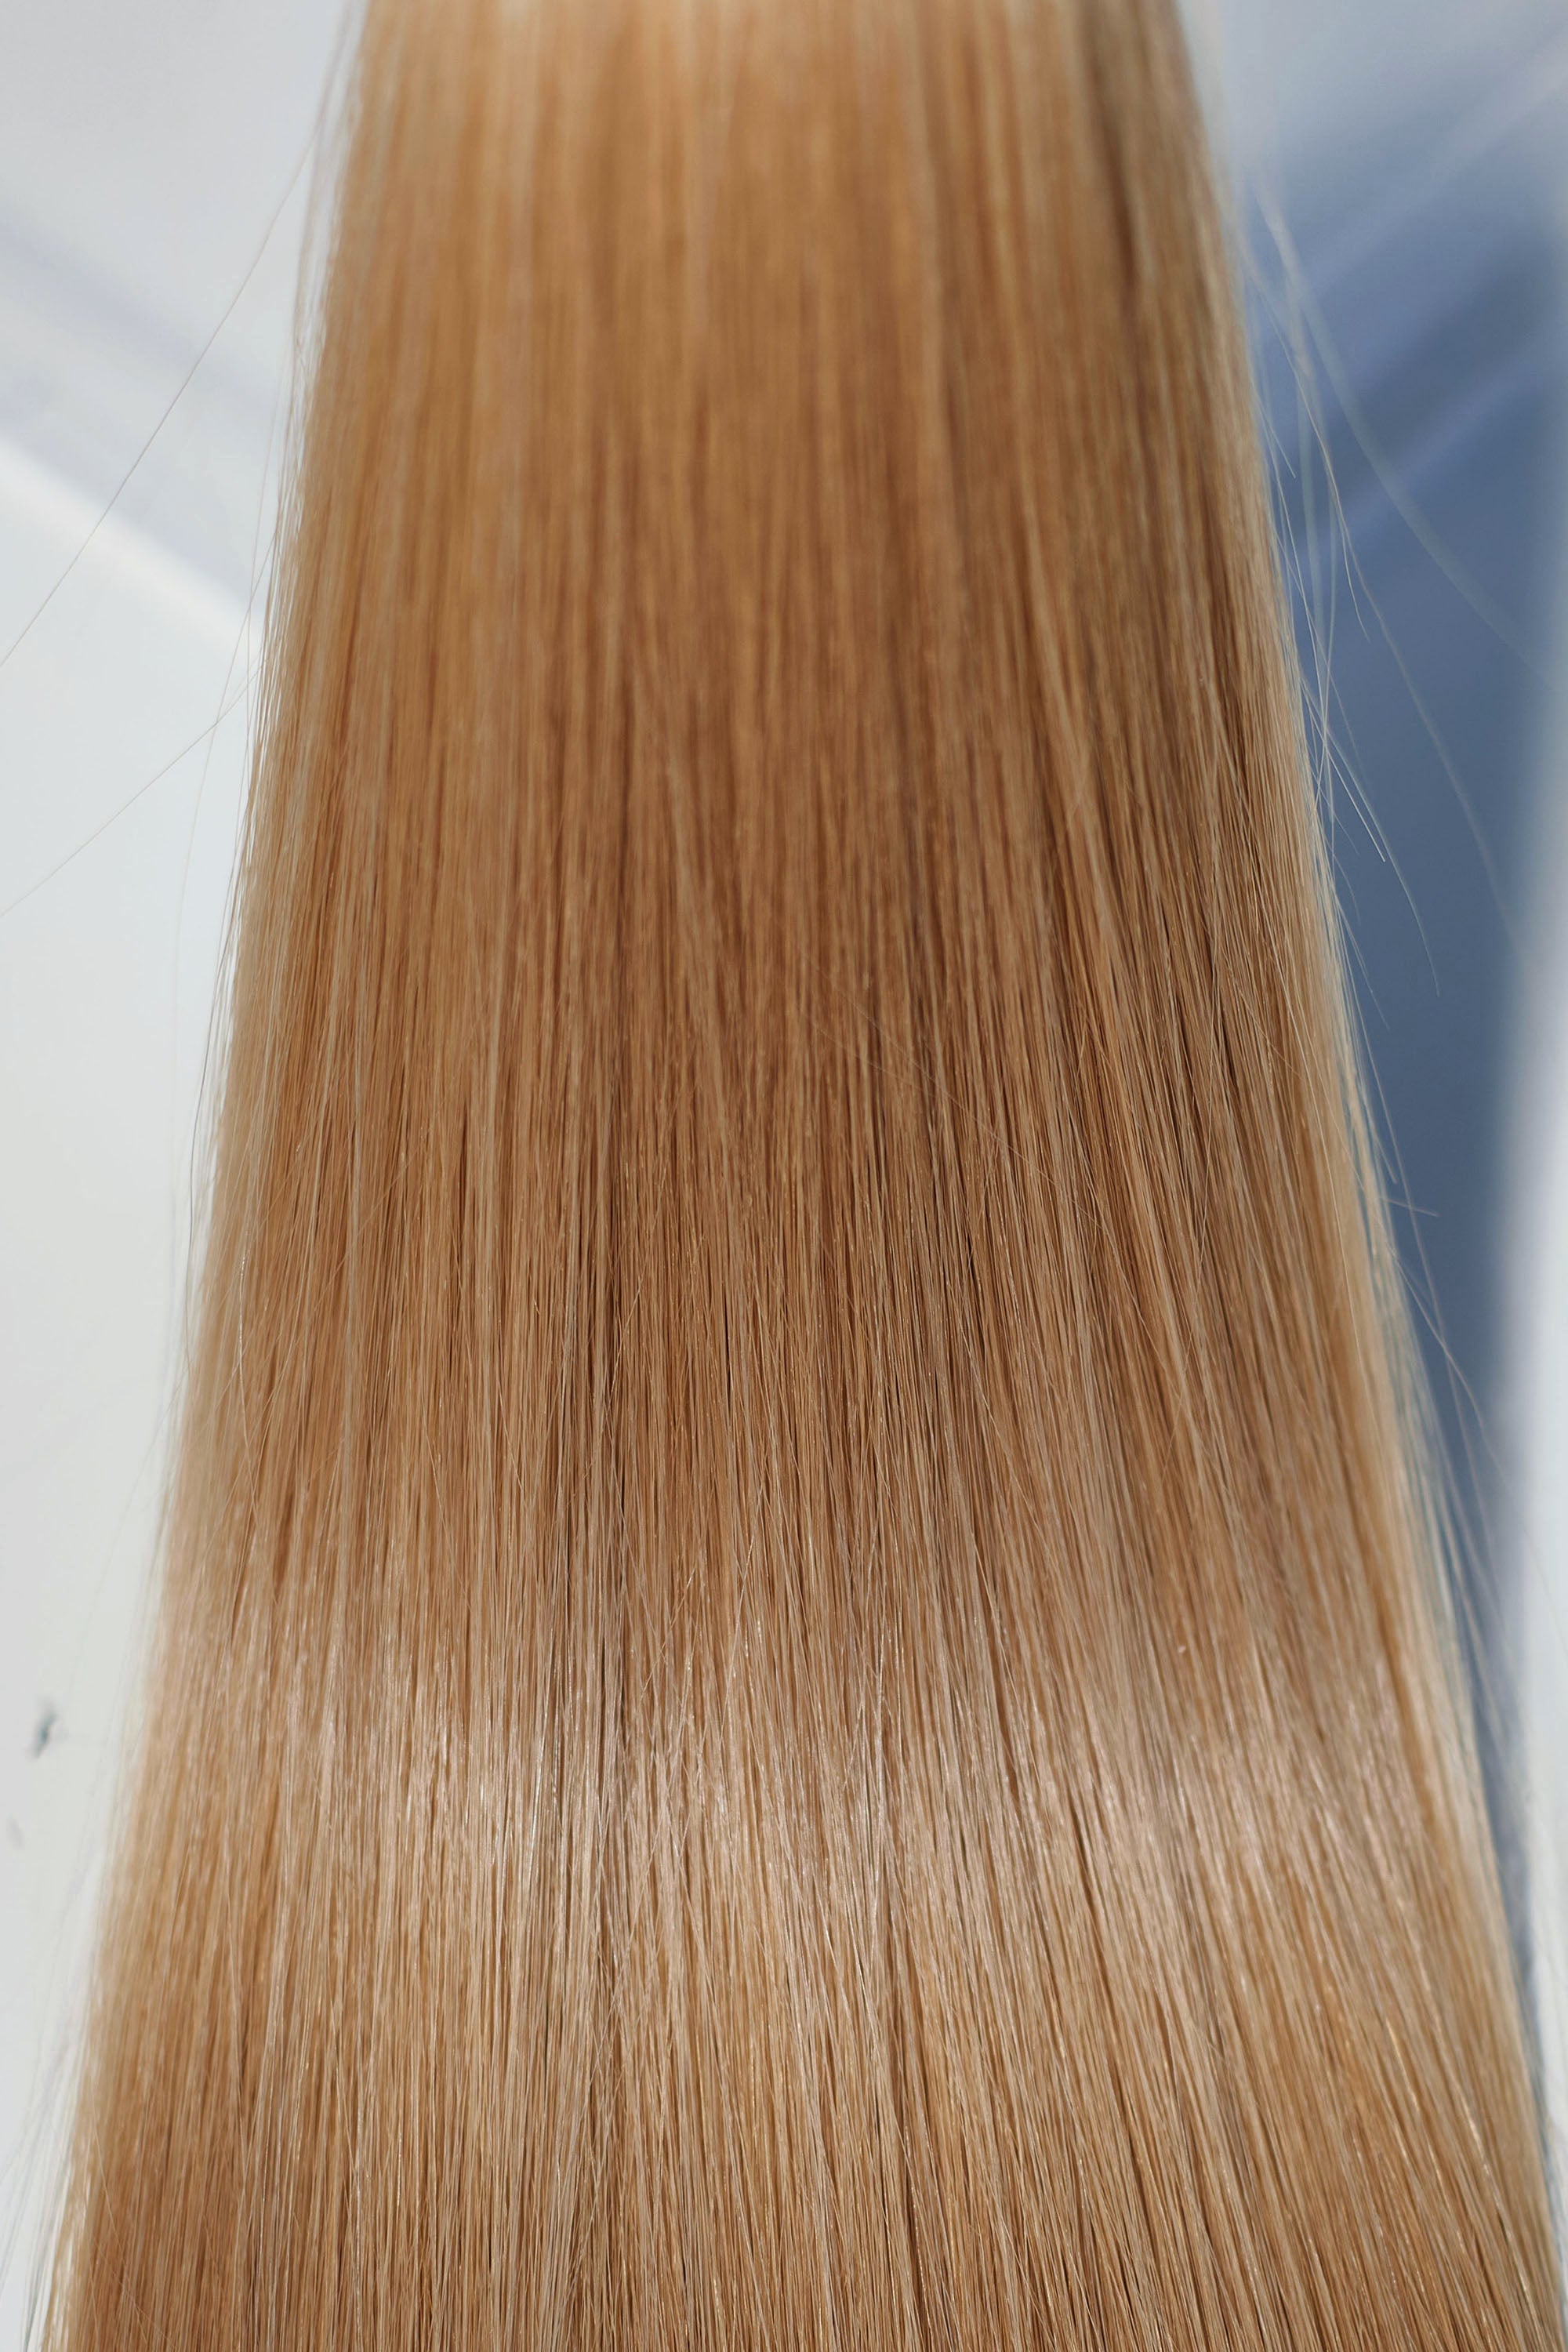 Behair professional Keratin Tip "Premium" 24" (60cm) Natural Straight Gold Sand #18 - 25g (Micro - 0.5g each pcs) hair extensions